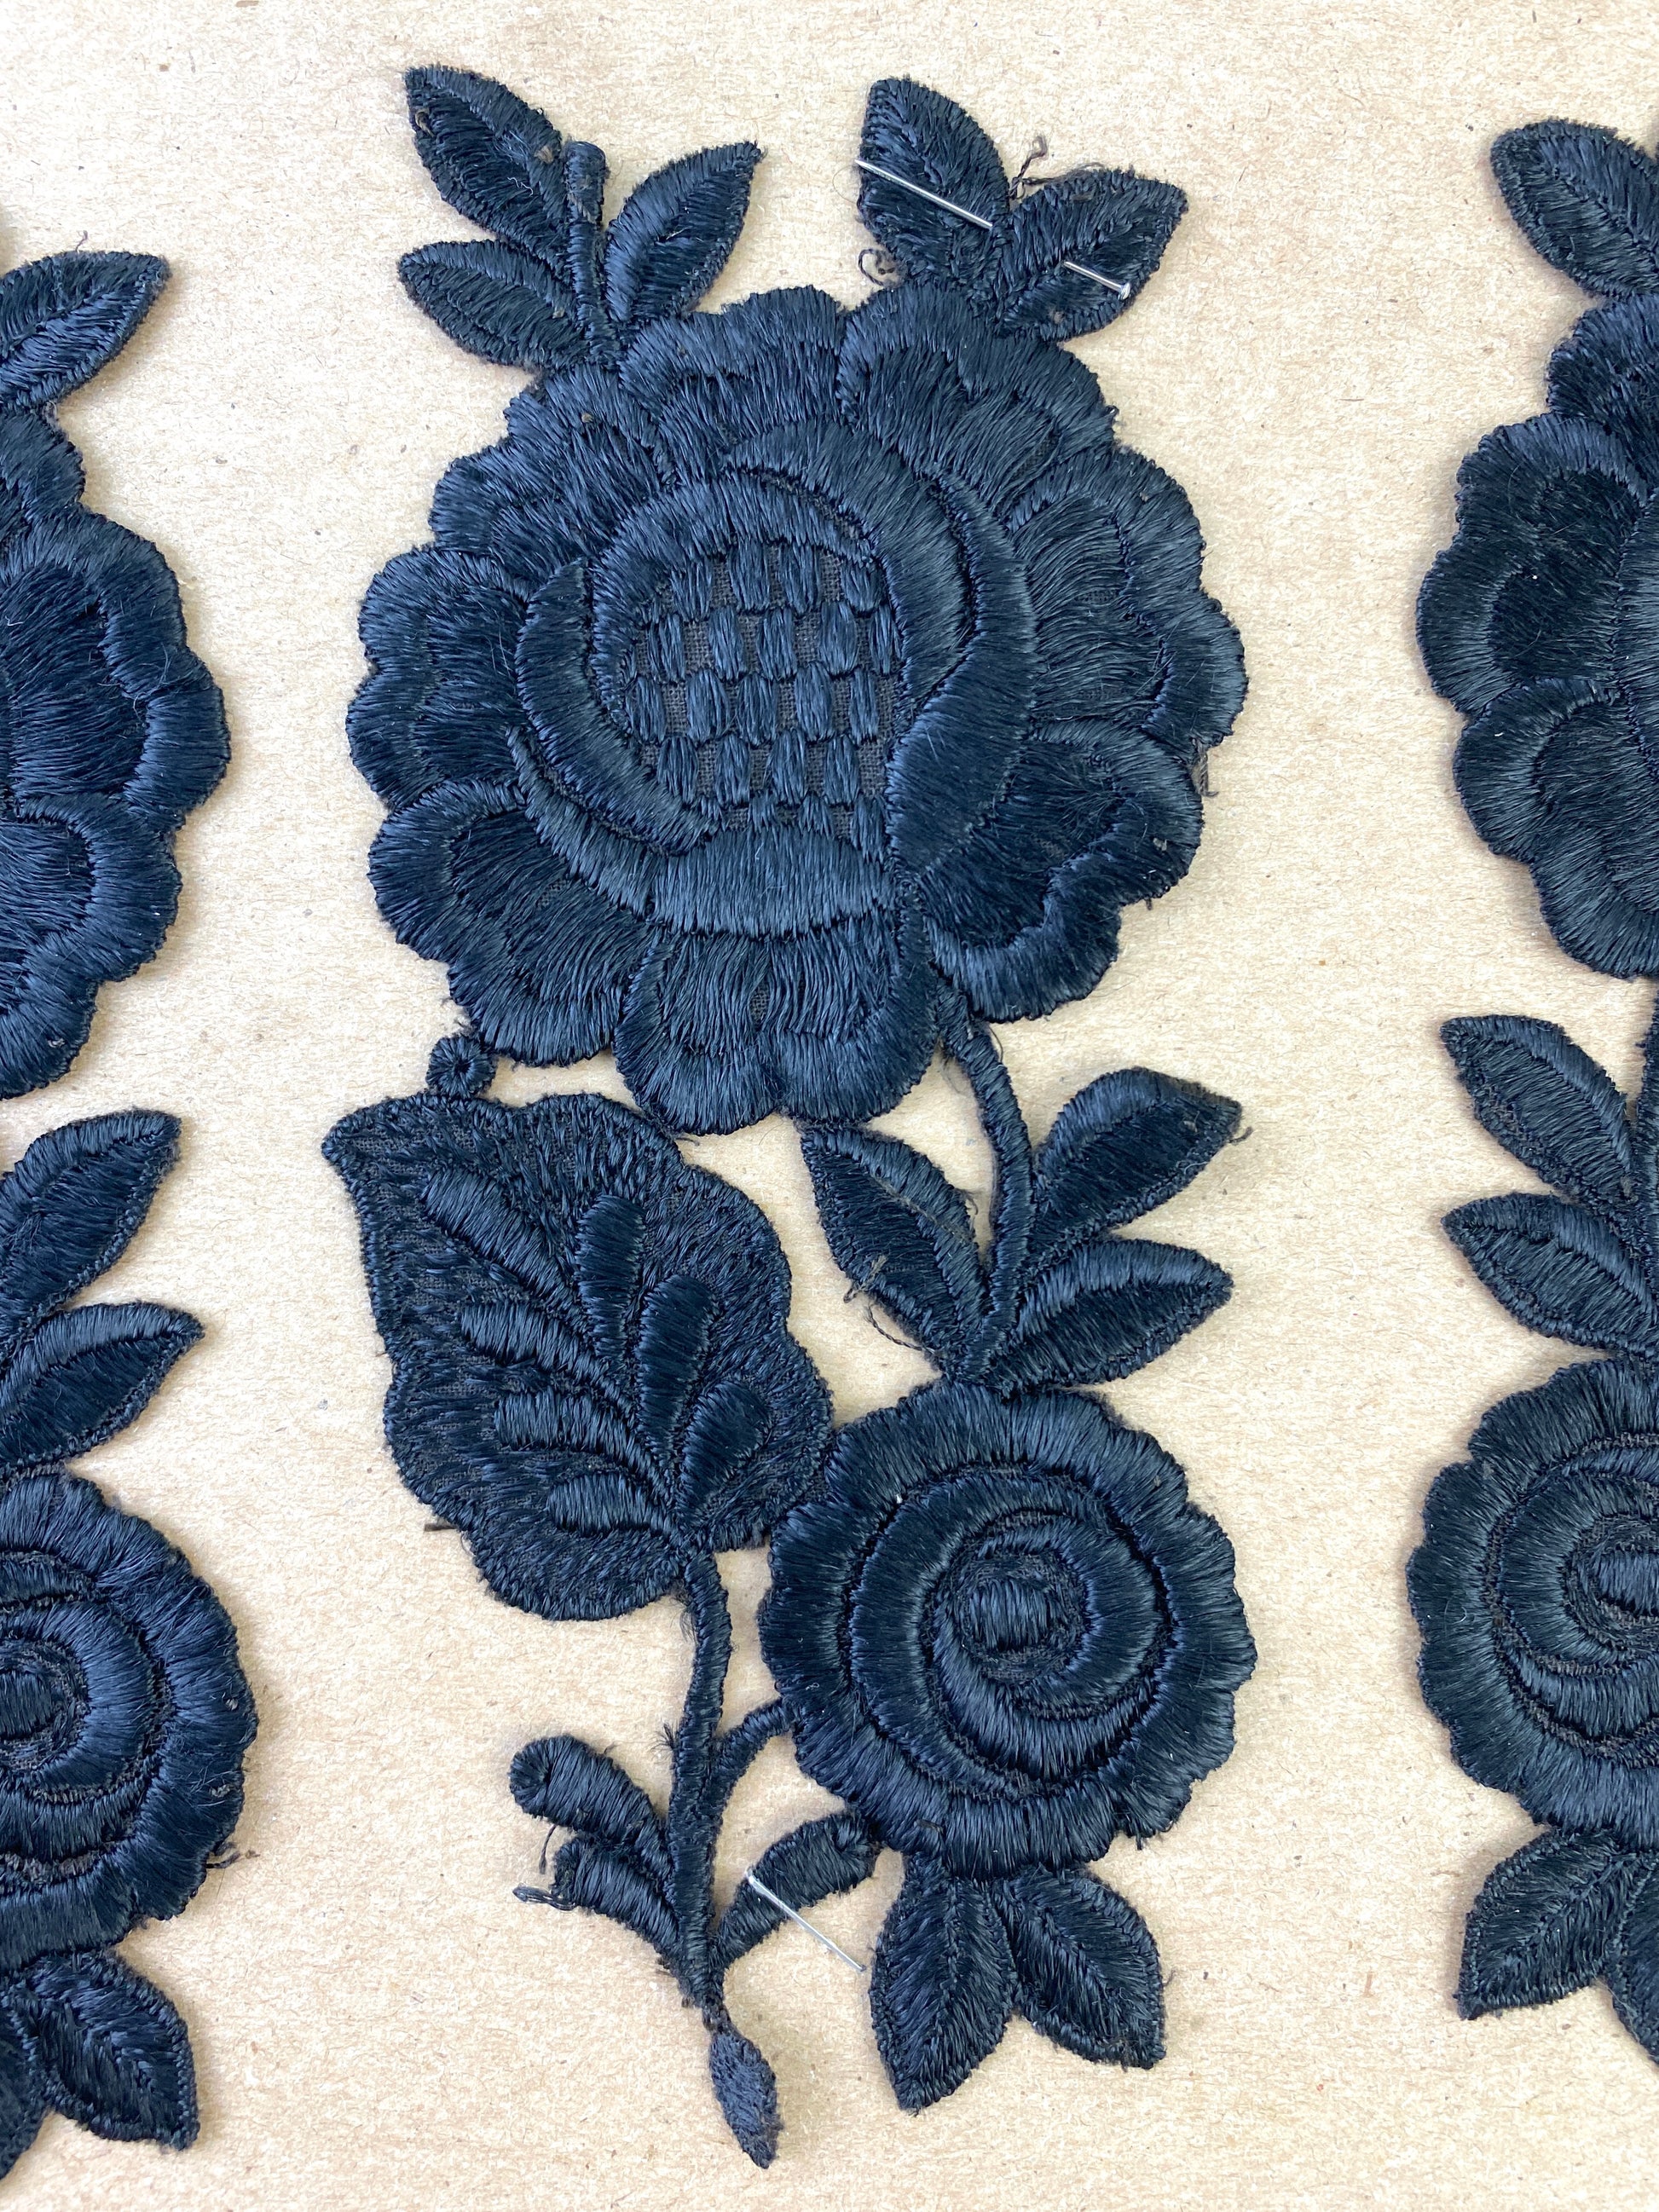 Antique Victorian Black Silk Floral Embroidered Appliqués, 4 Pieces